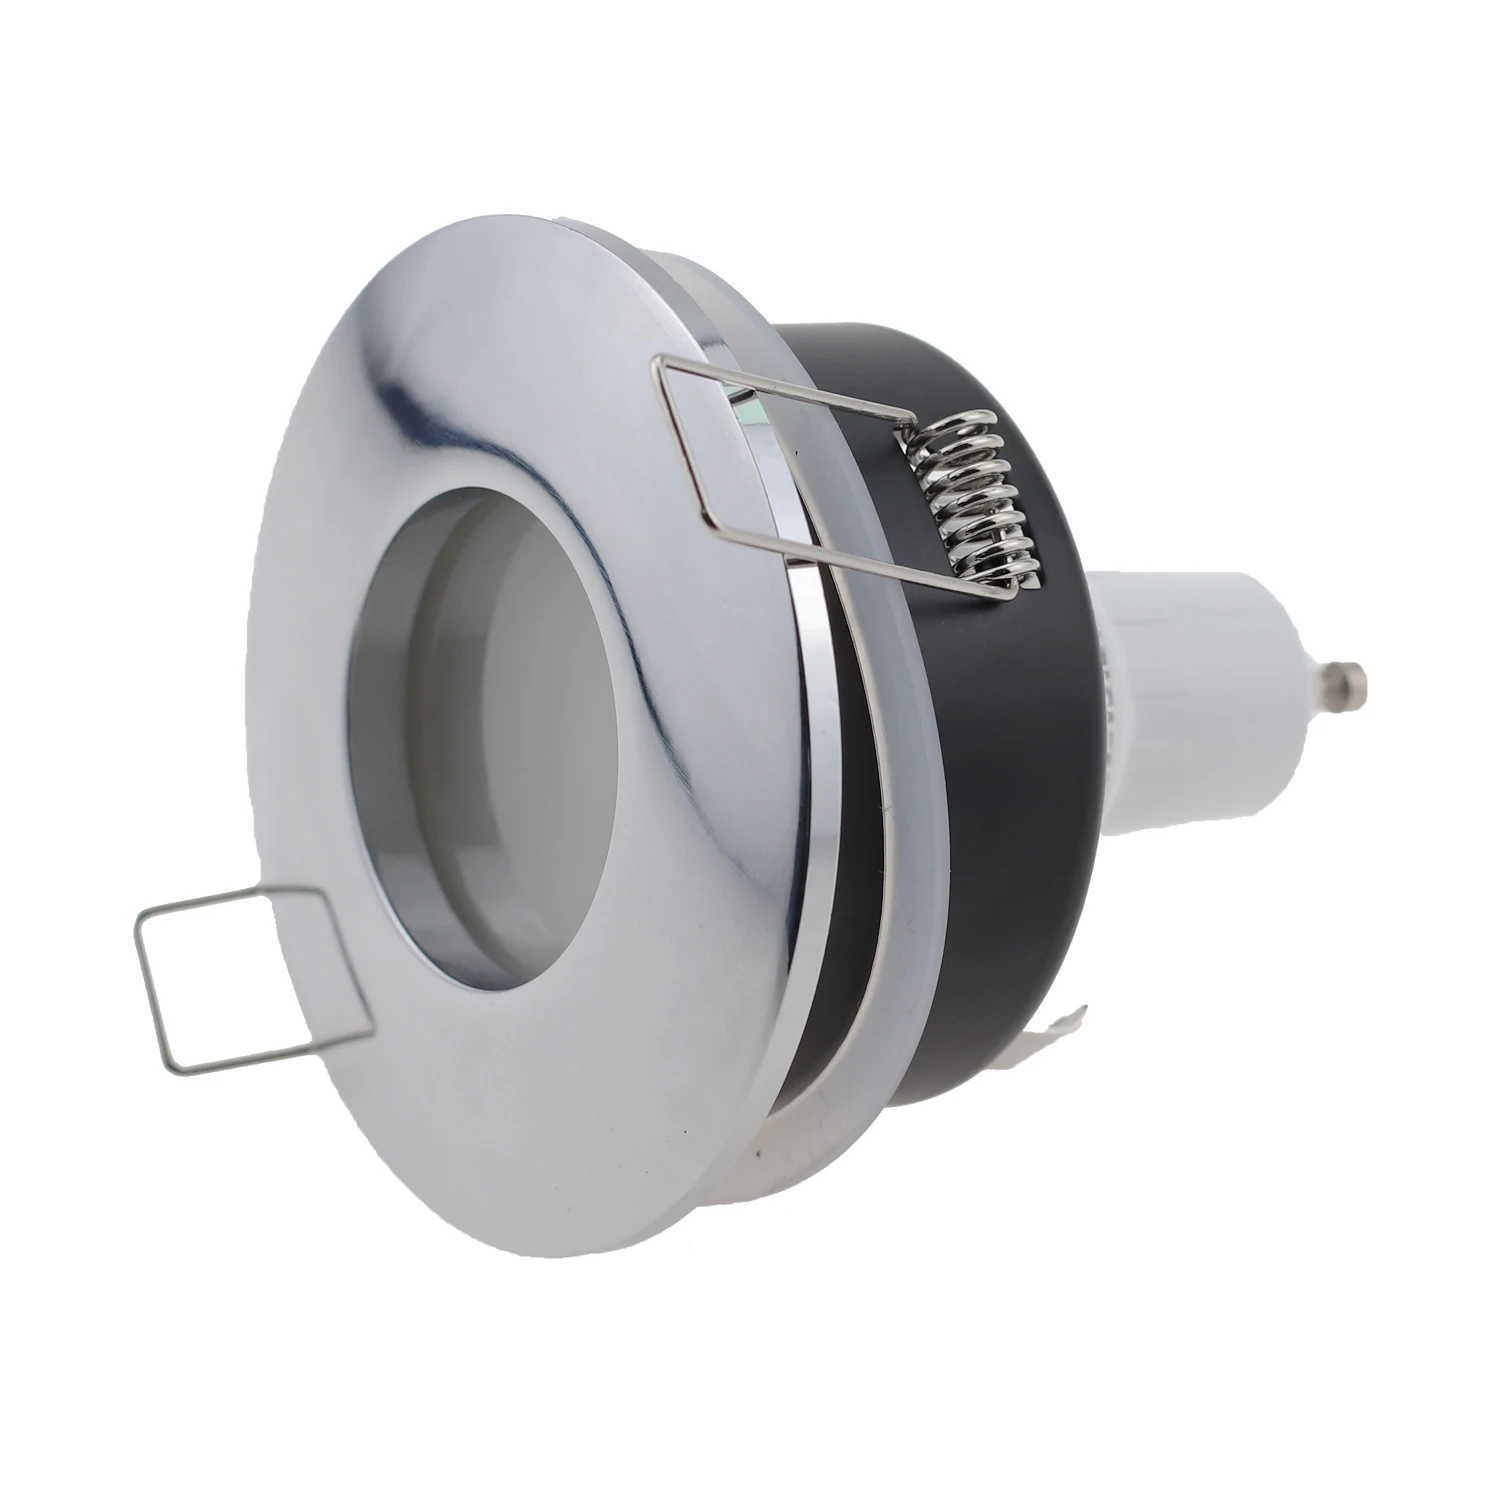 IP65 with Glass Lens LED Eyeball Fixture Recessed Spotlight Casing Downlight Eye ball Fitting Frame Casing Light Lamp Siling